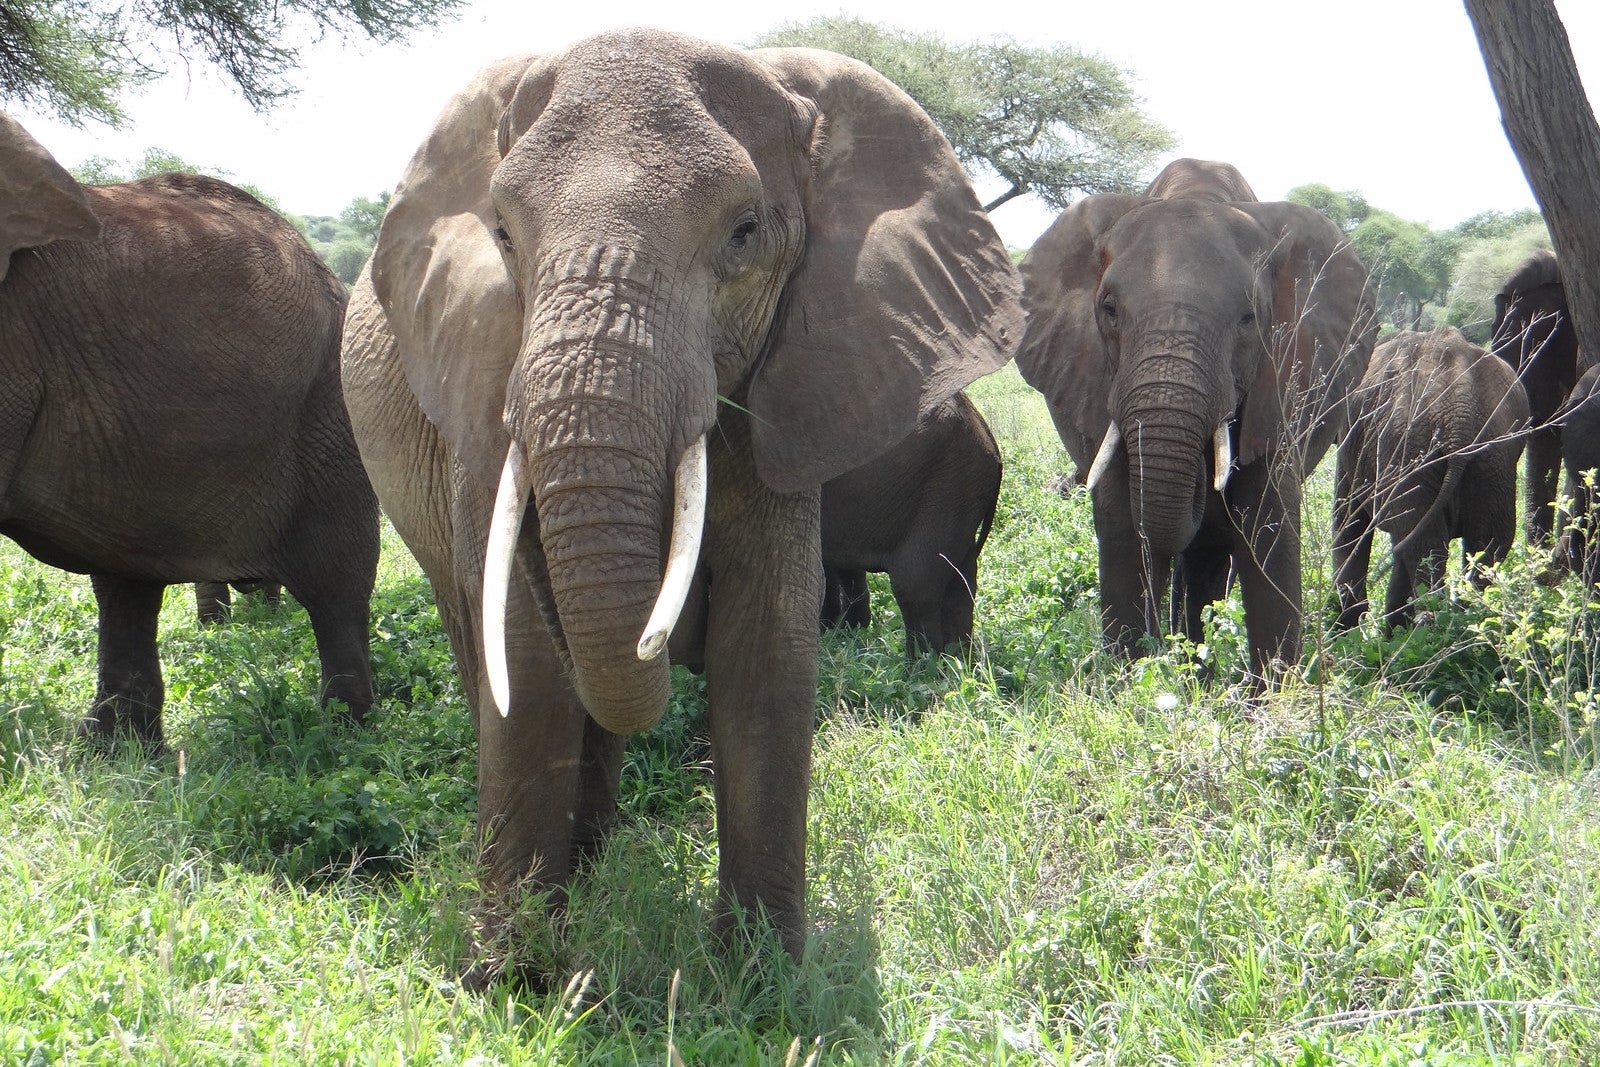 Elephants in the Ngorongoro Crater in Tanzania